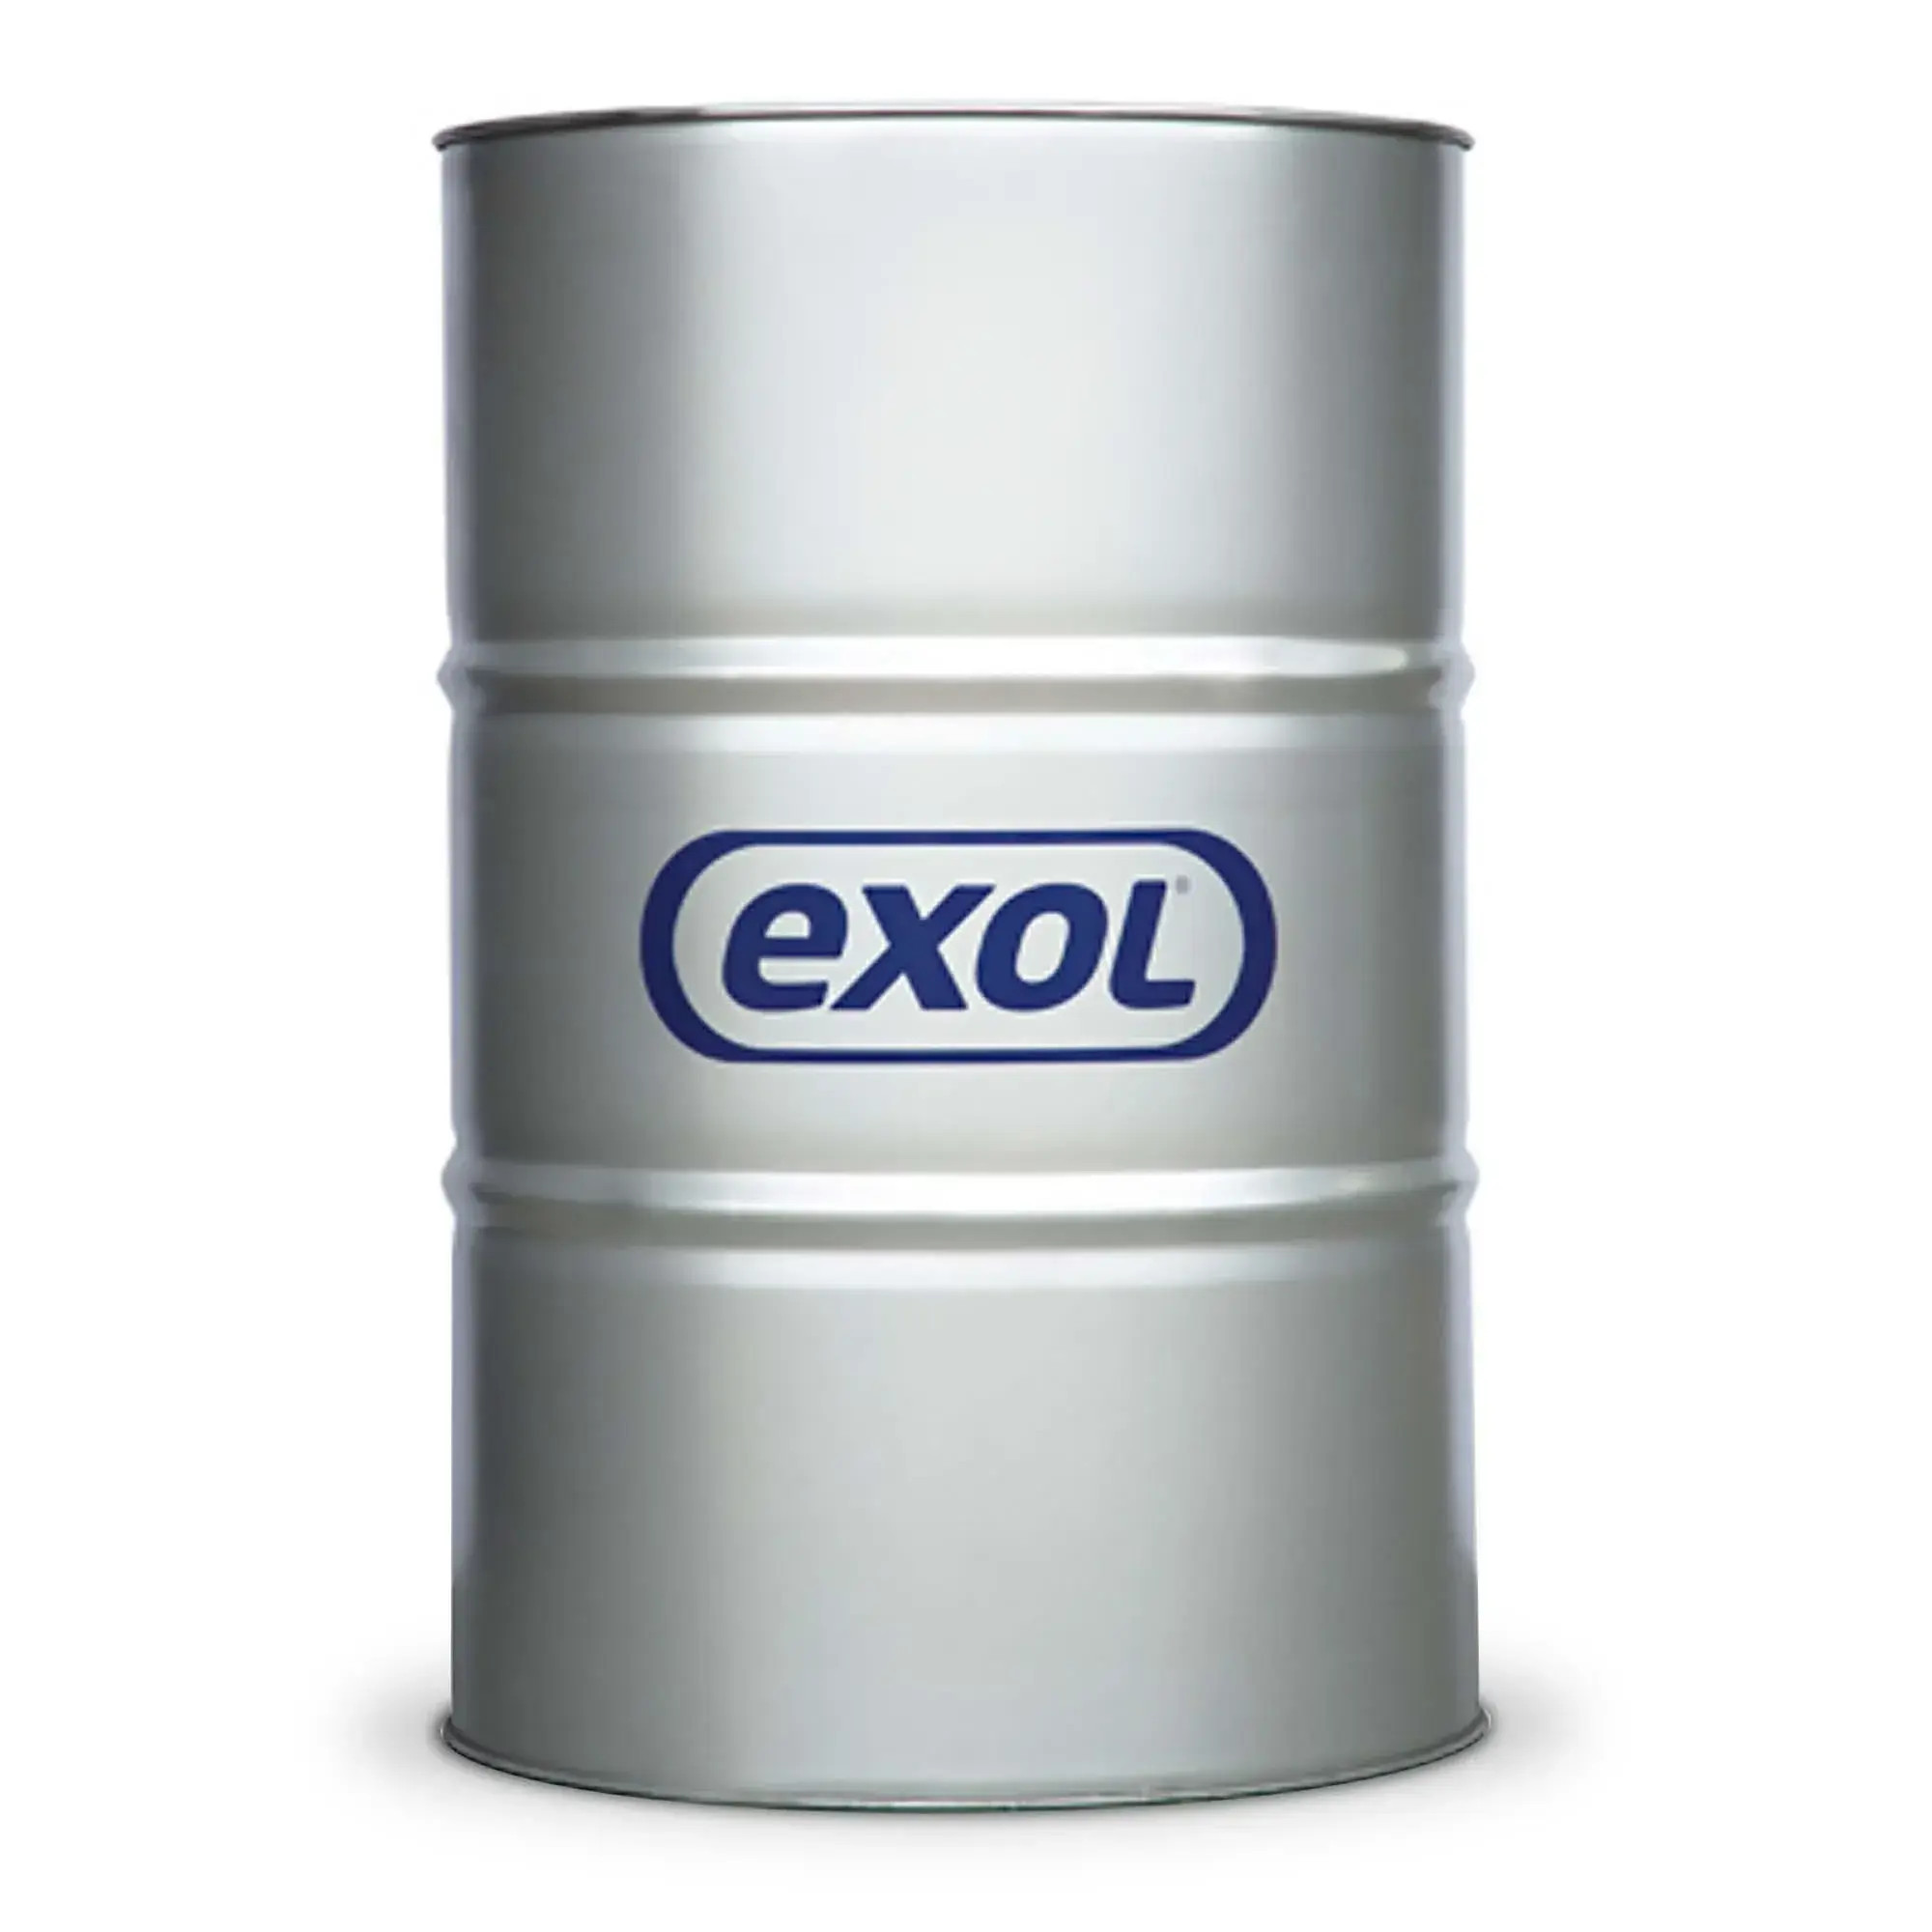 Exol Chainsaw Oil